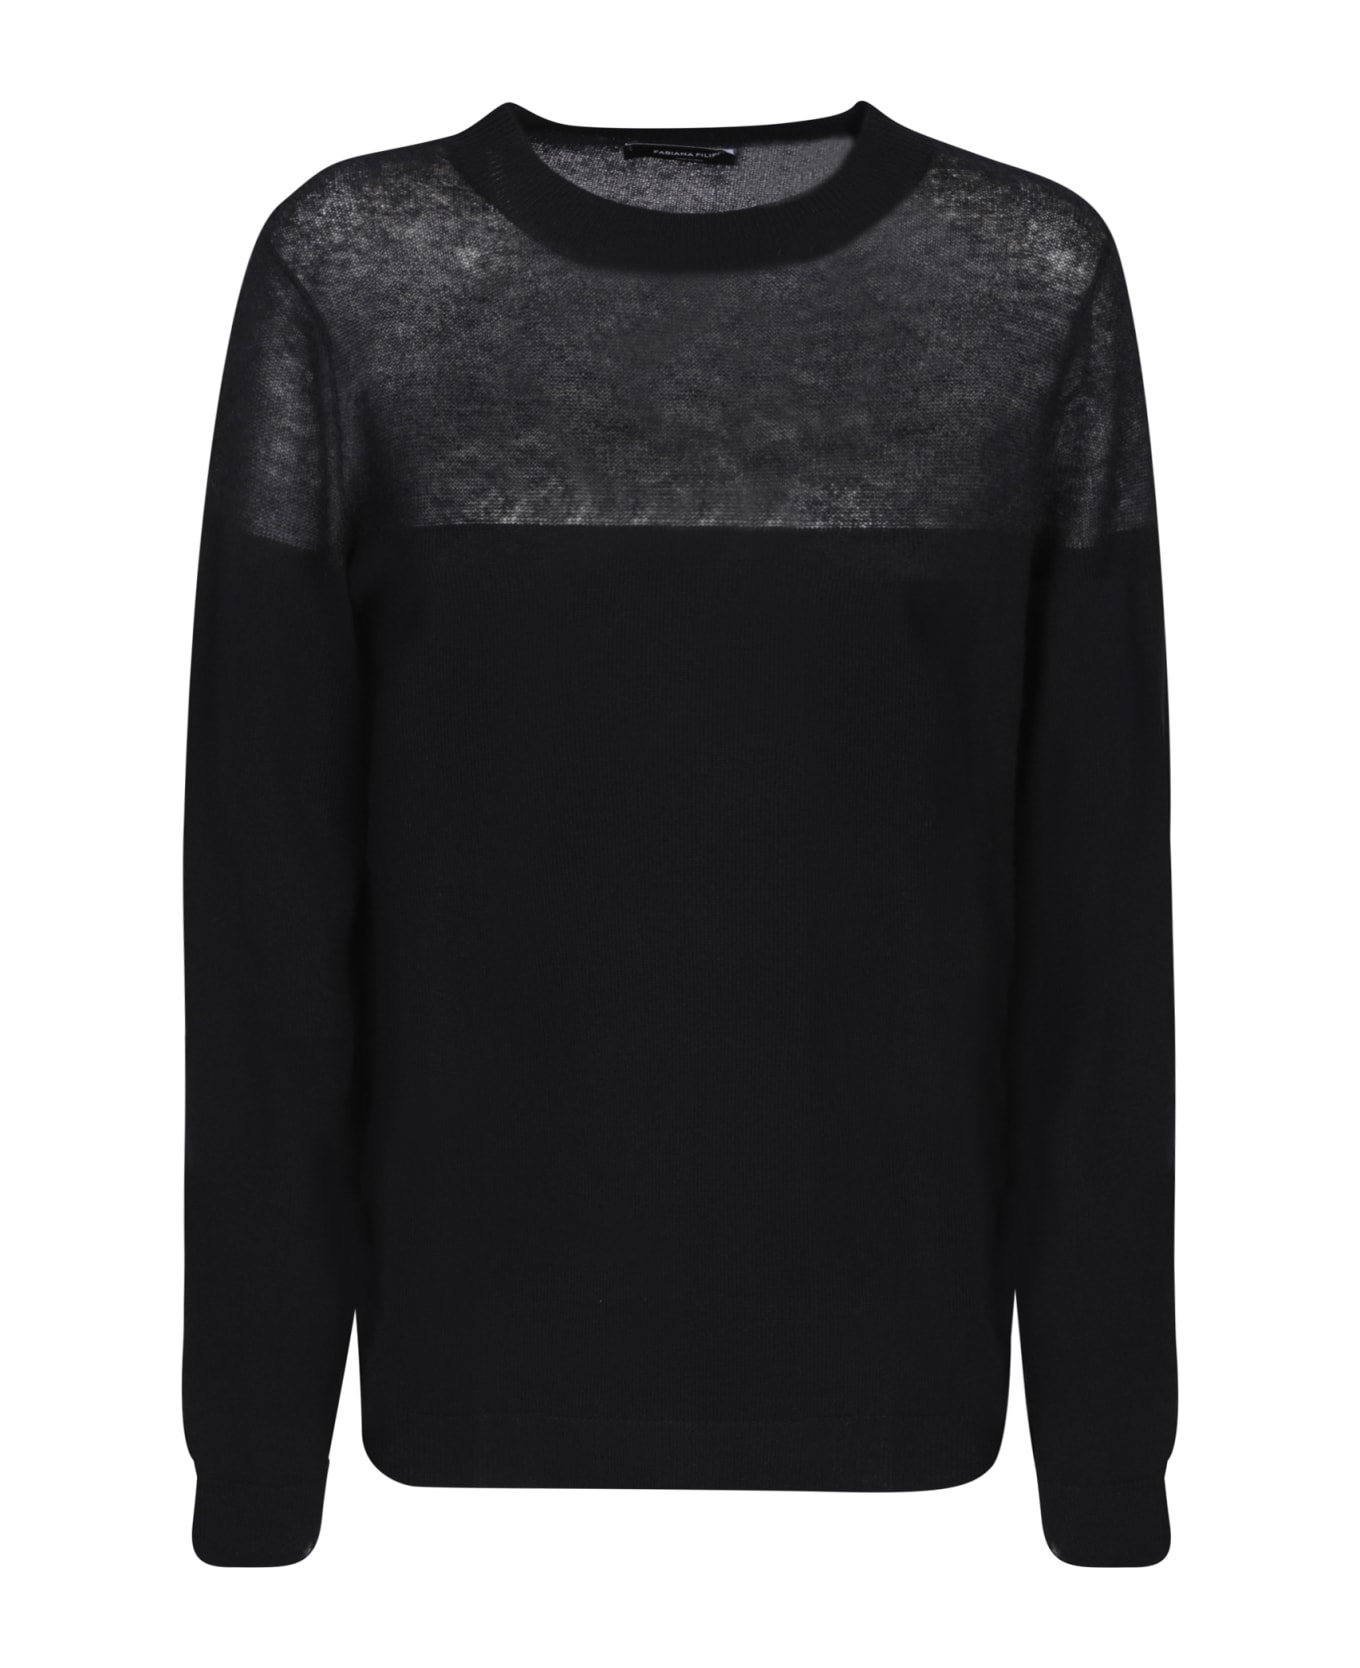 Fabiana Filippi Premium Yarn Black Sweater - Black ニットウェア